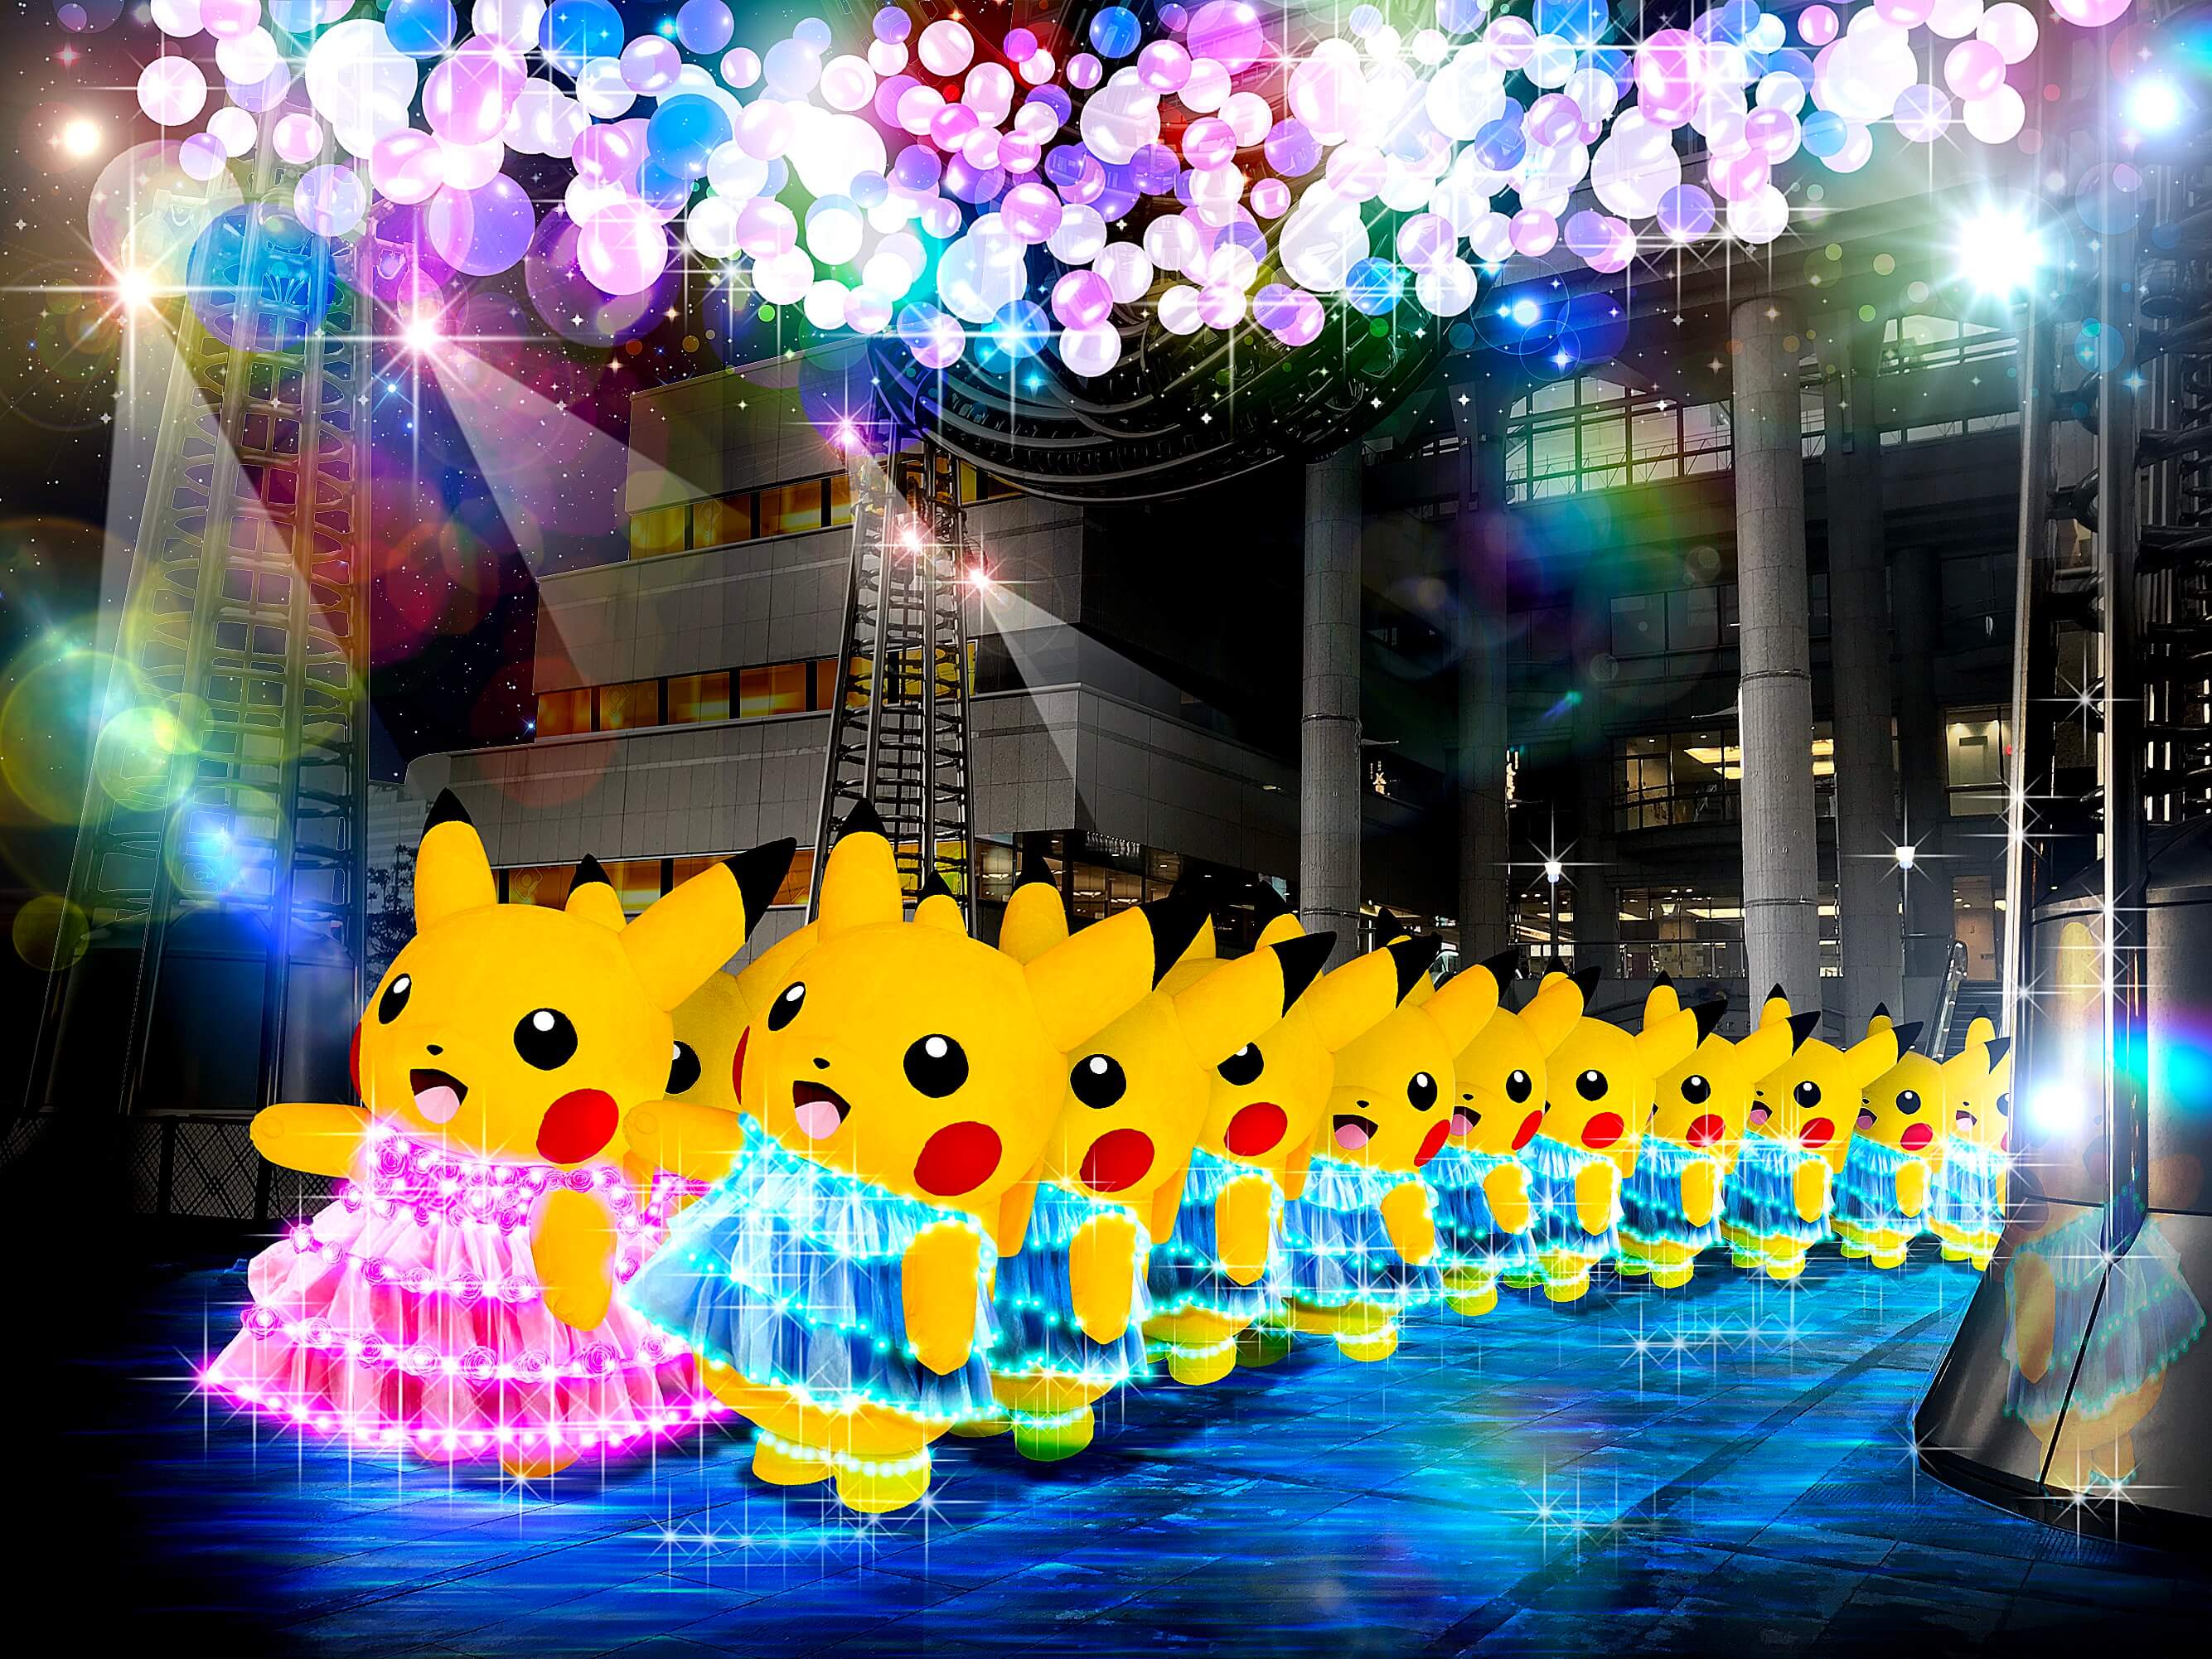 Over 1,500 Pikachu to Parade at Yokohama’s 2018 “Pikachu Outbreak”